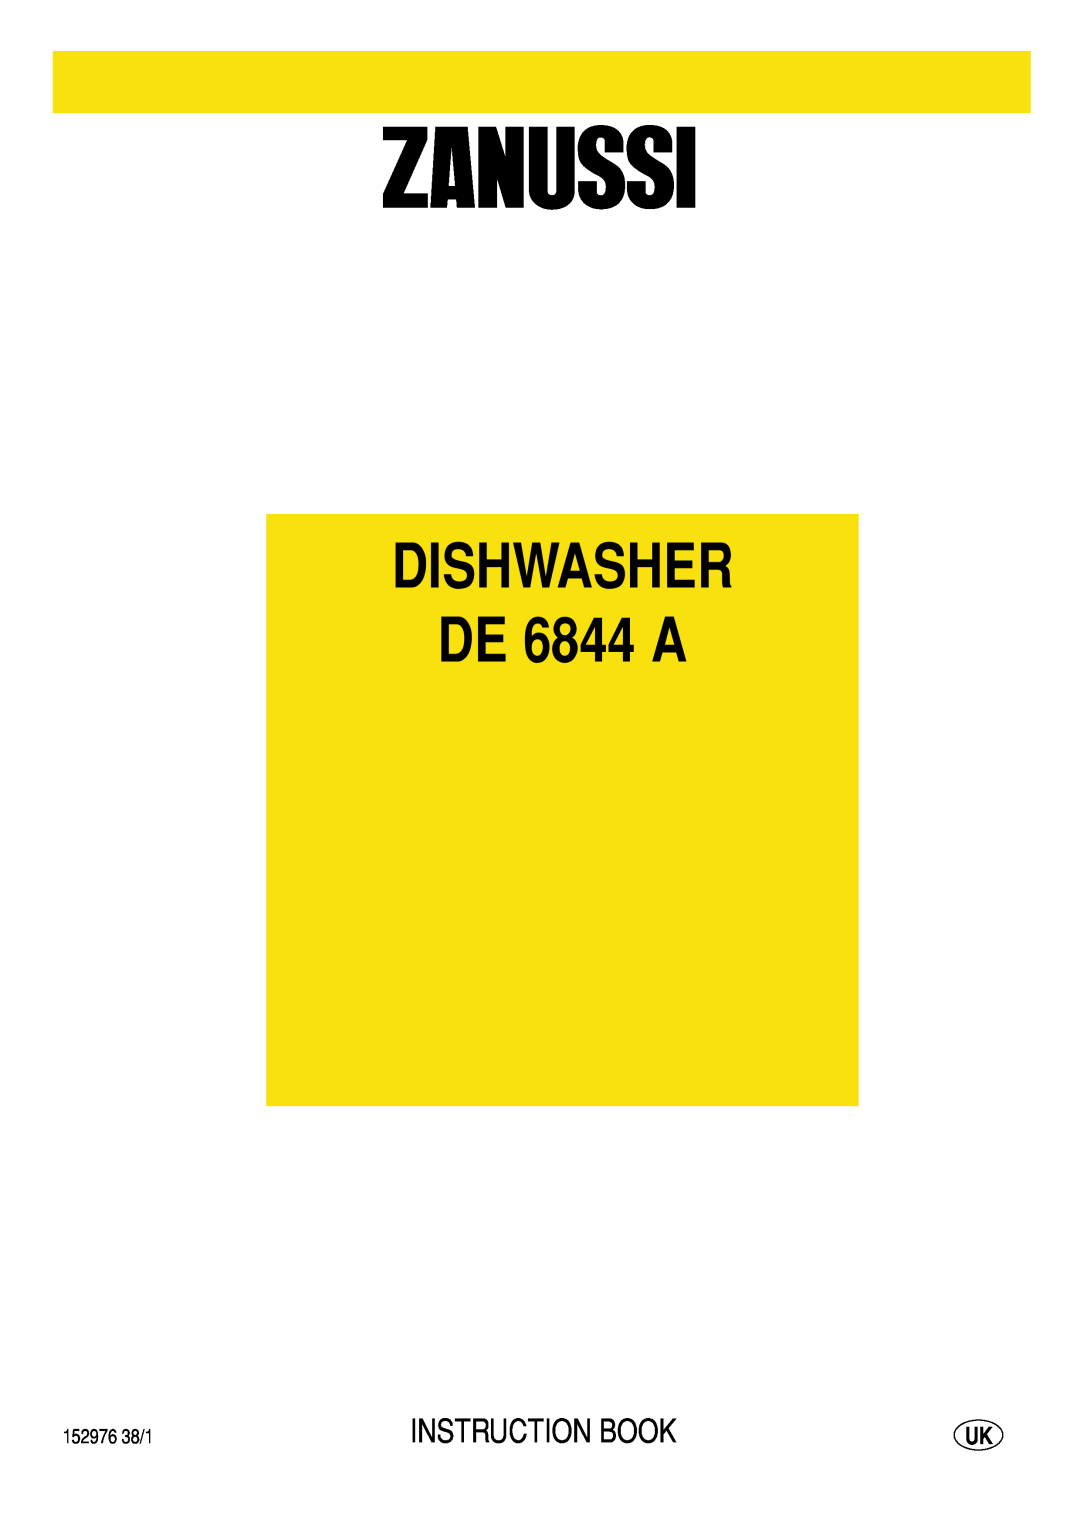 Zanussi manual 152976 38/1, DISHWASHER DE 6844 A, Instruction Book 